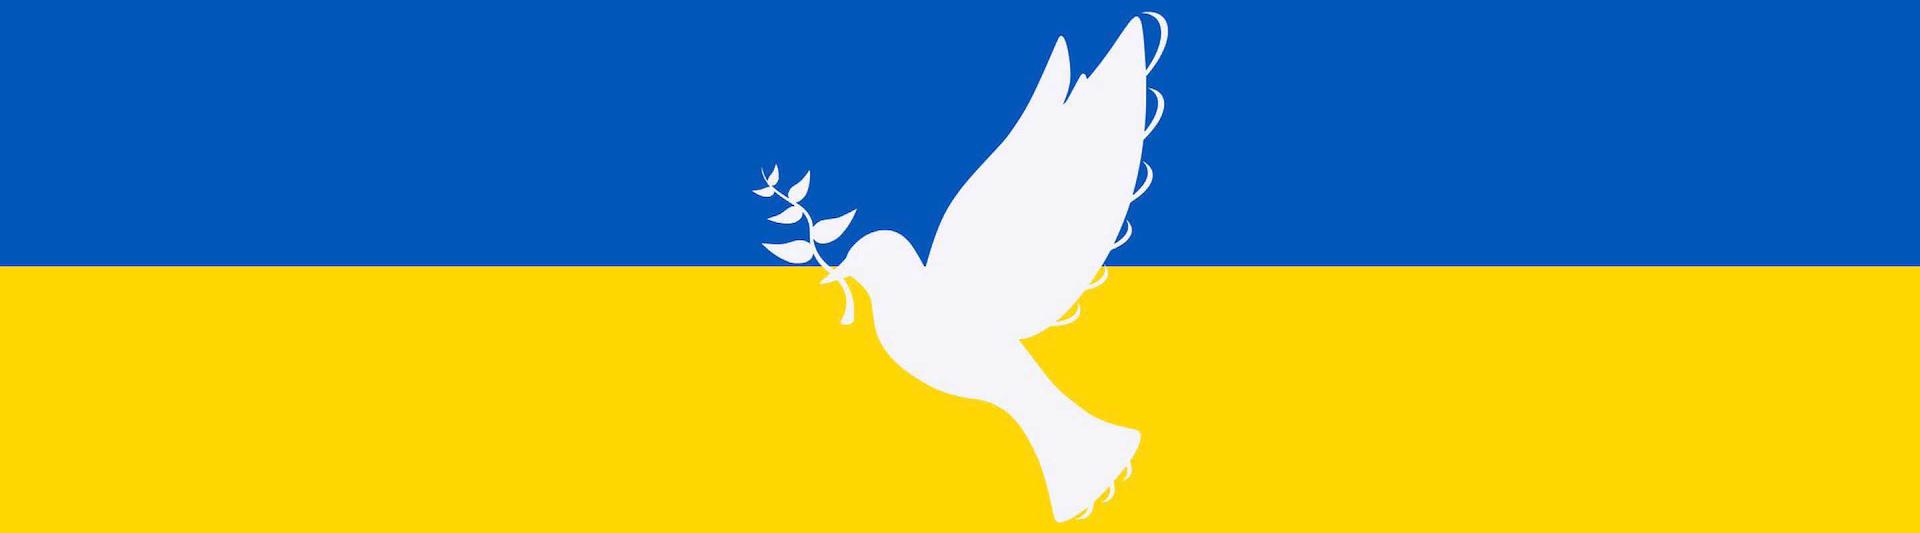 Ukraine flag with white peace dove.